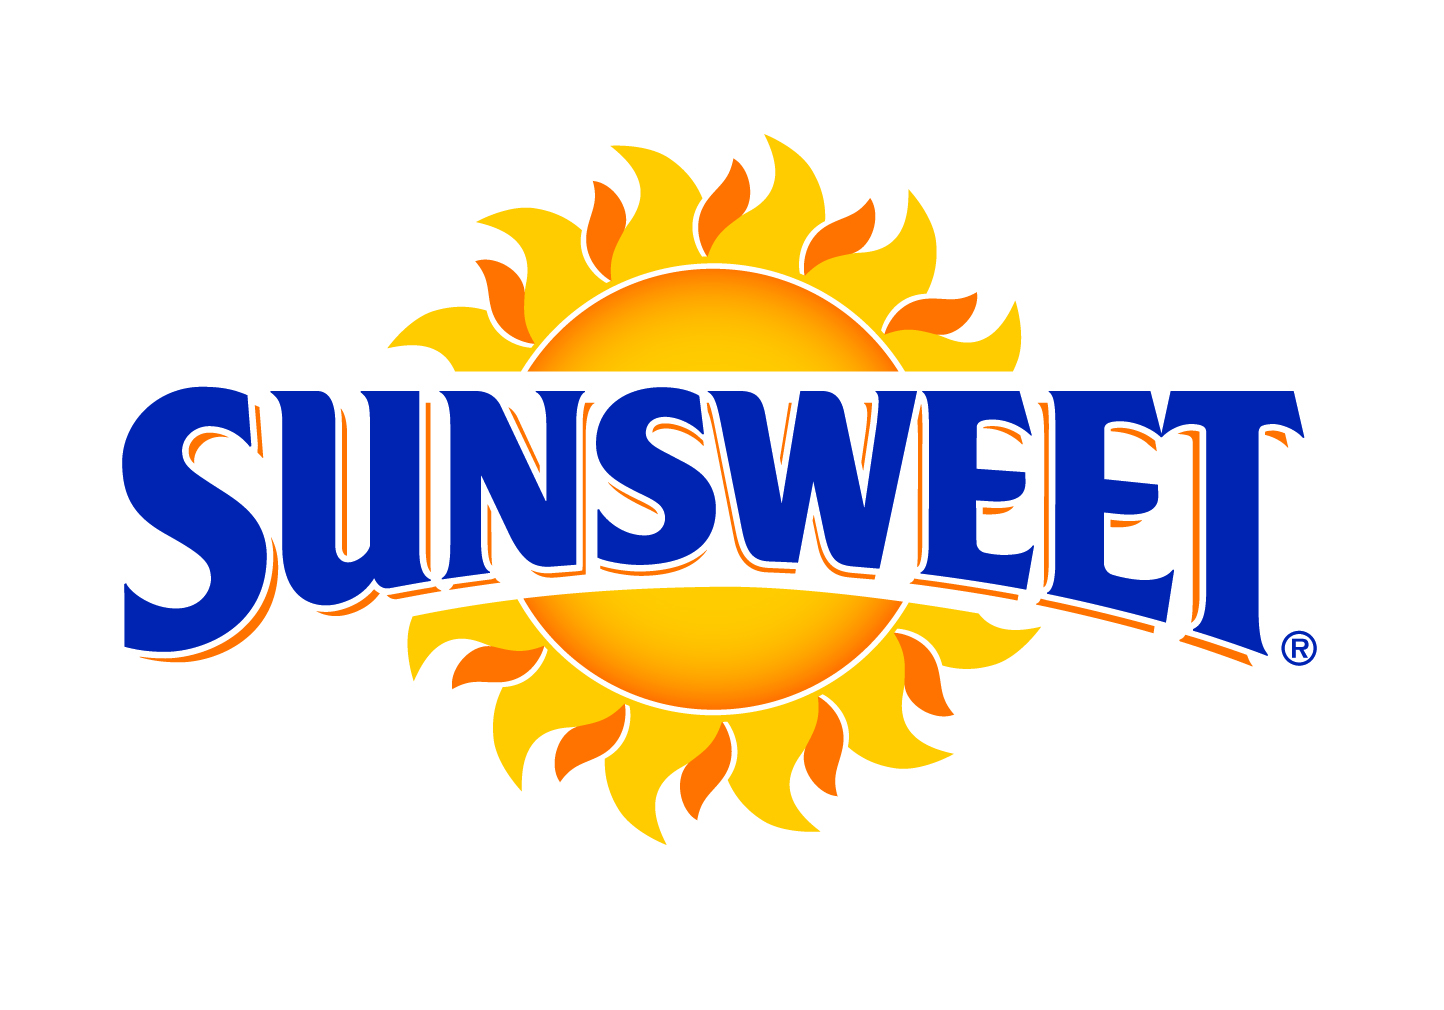 Sunsweet Promotes Benefits of Prunes, Prune Juices